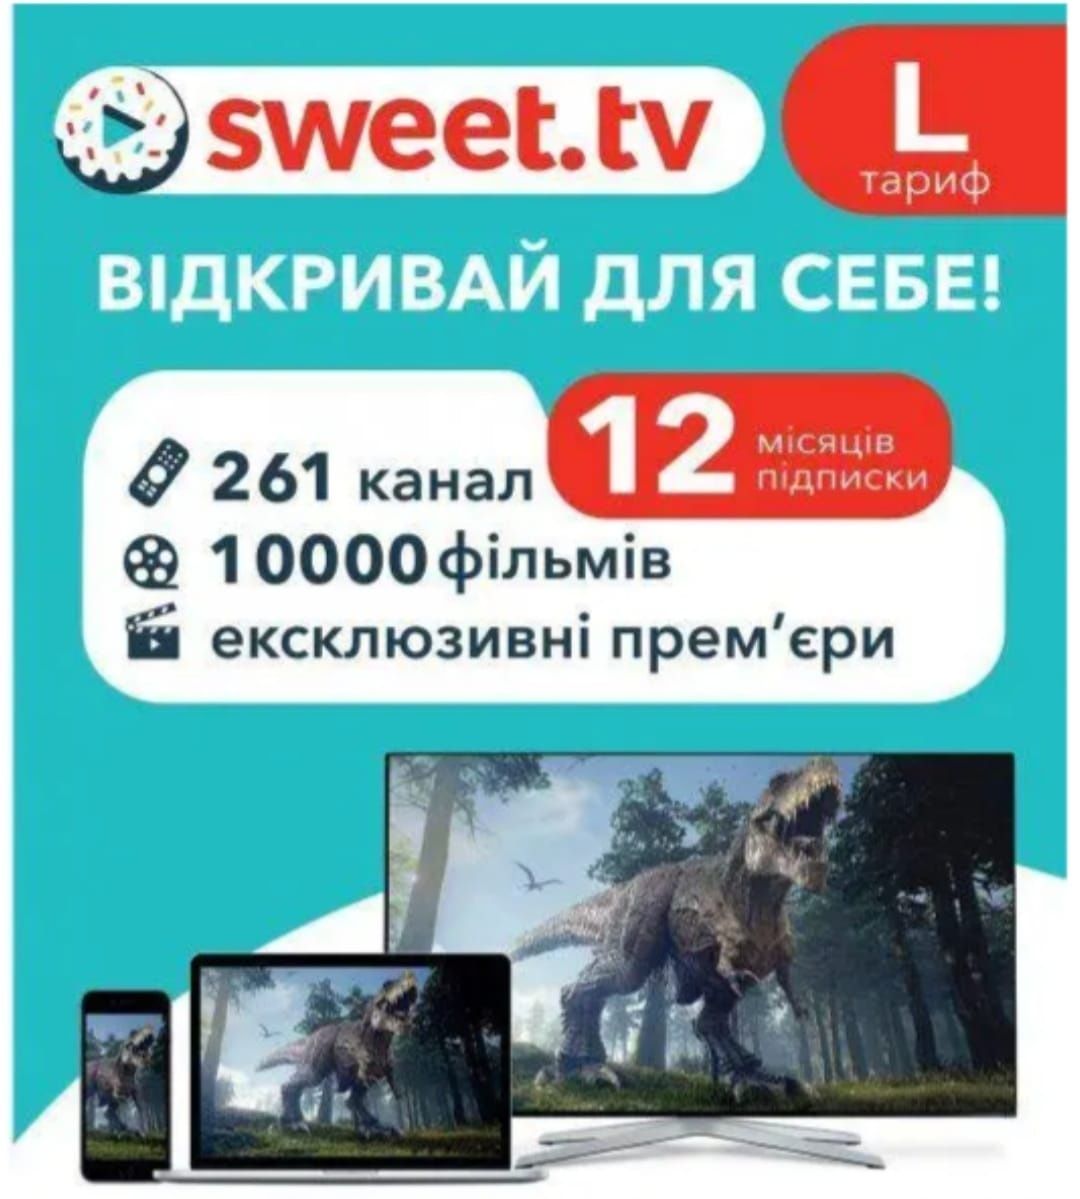 Sweet.tv тариф на рік